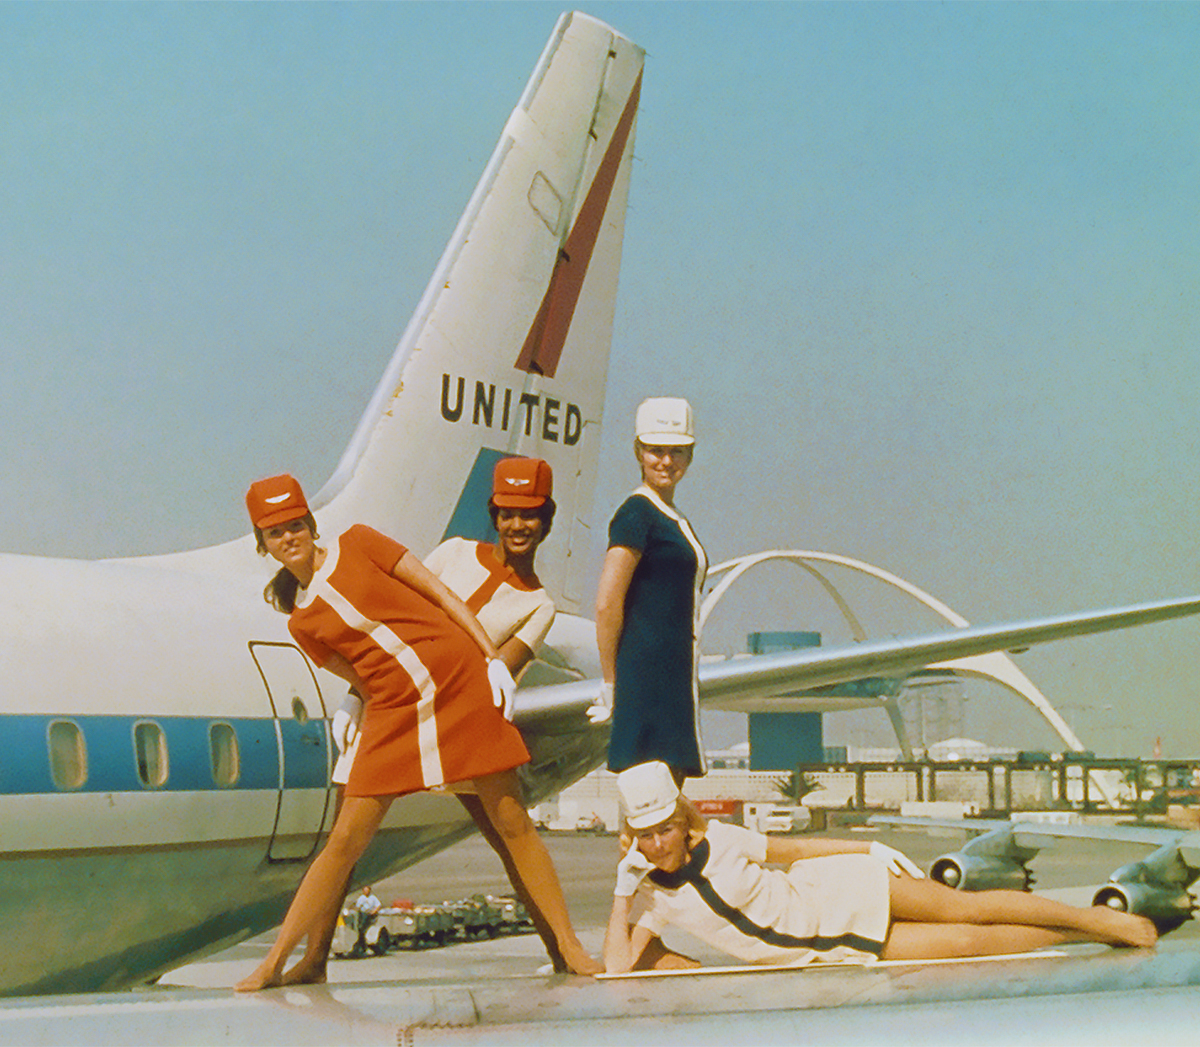 United stewardesses